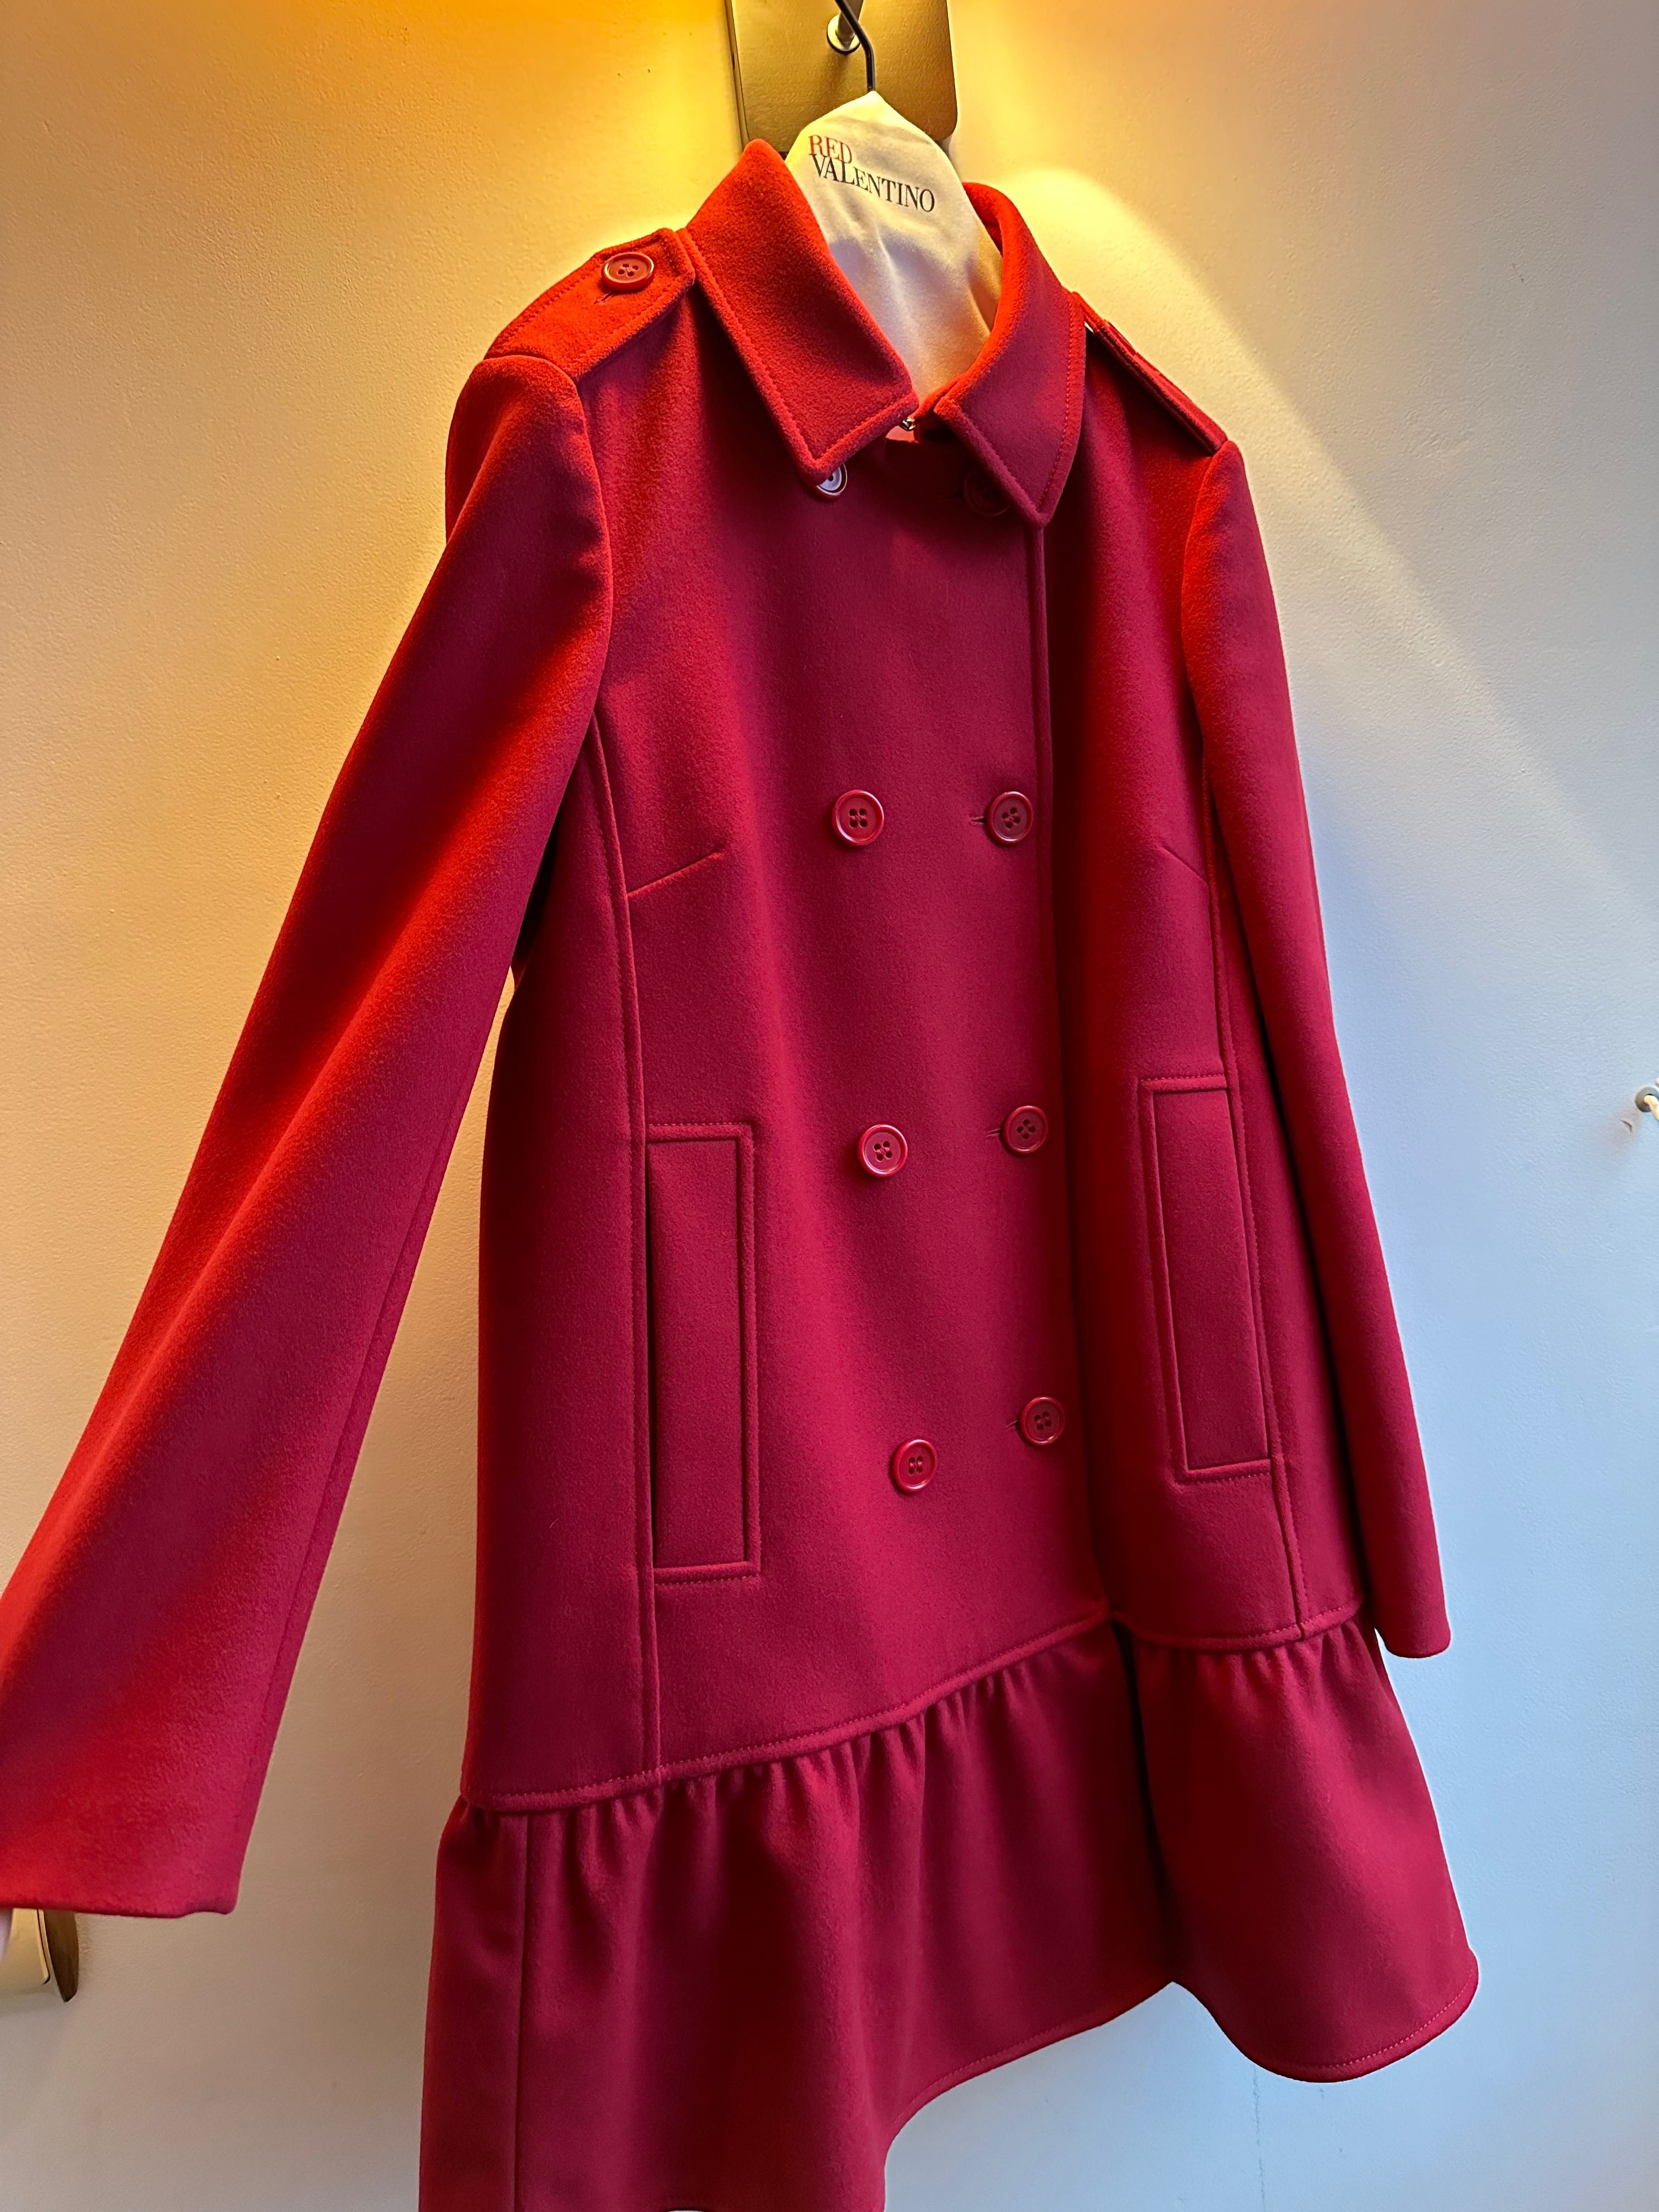 Palton Red Valentino Roz Fuchsia Xs-s